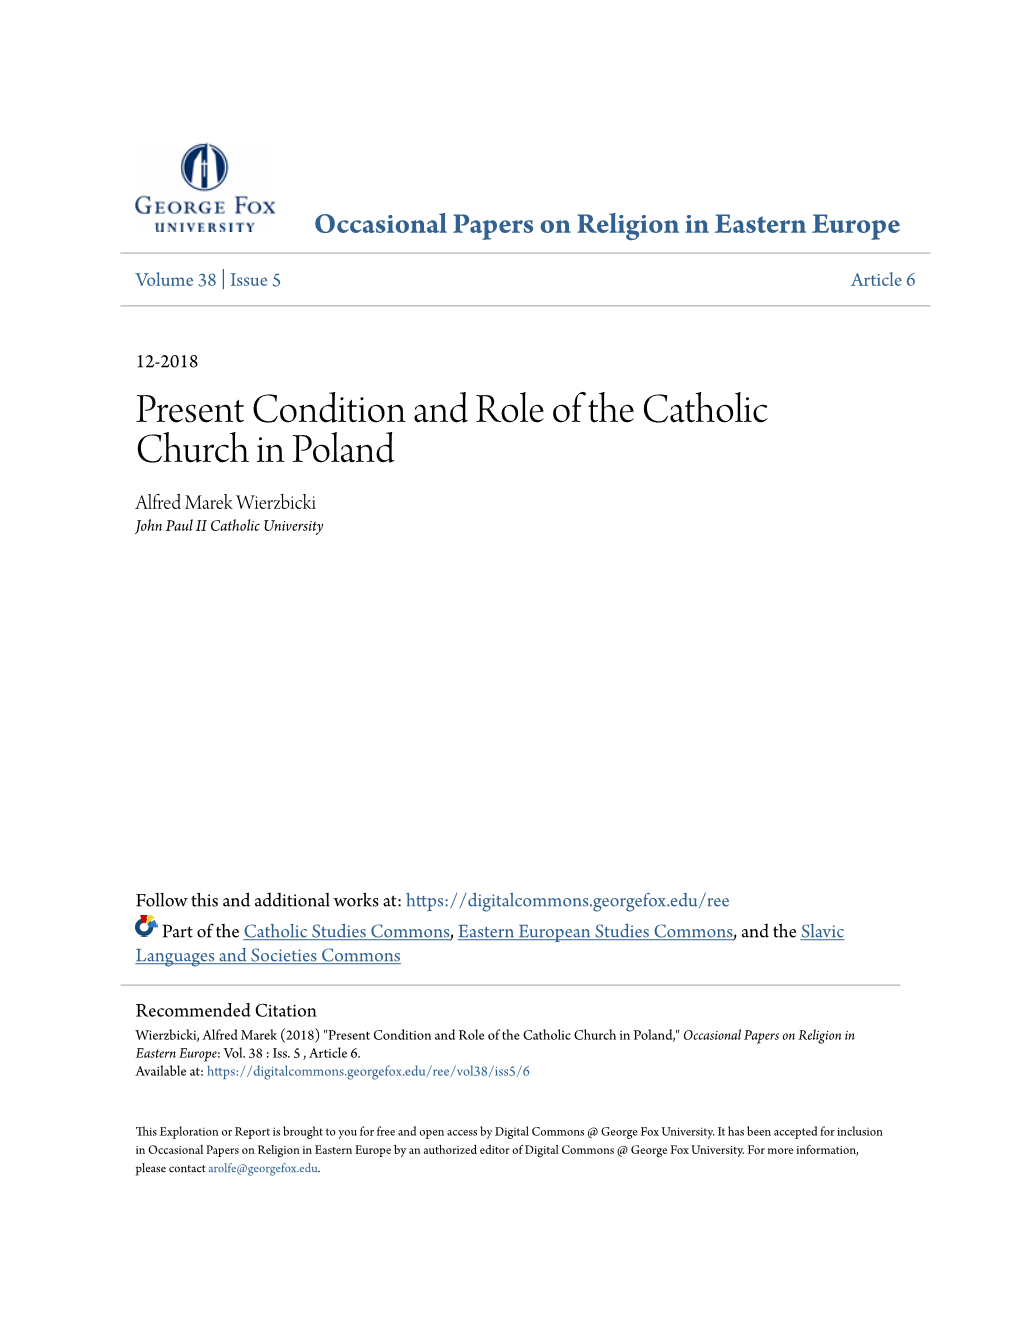 Present Condition and Role of the Catholic Church in Poland Alfred Marek Wierzbicki John Paul II Catholic University